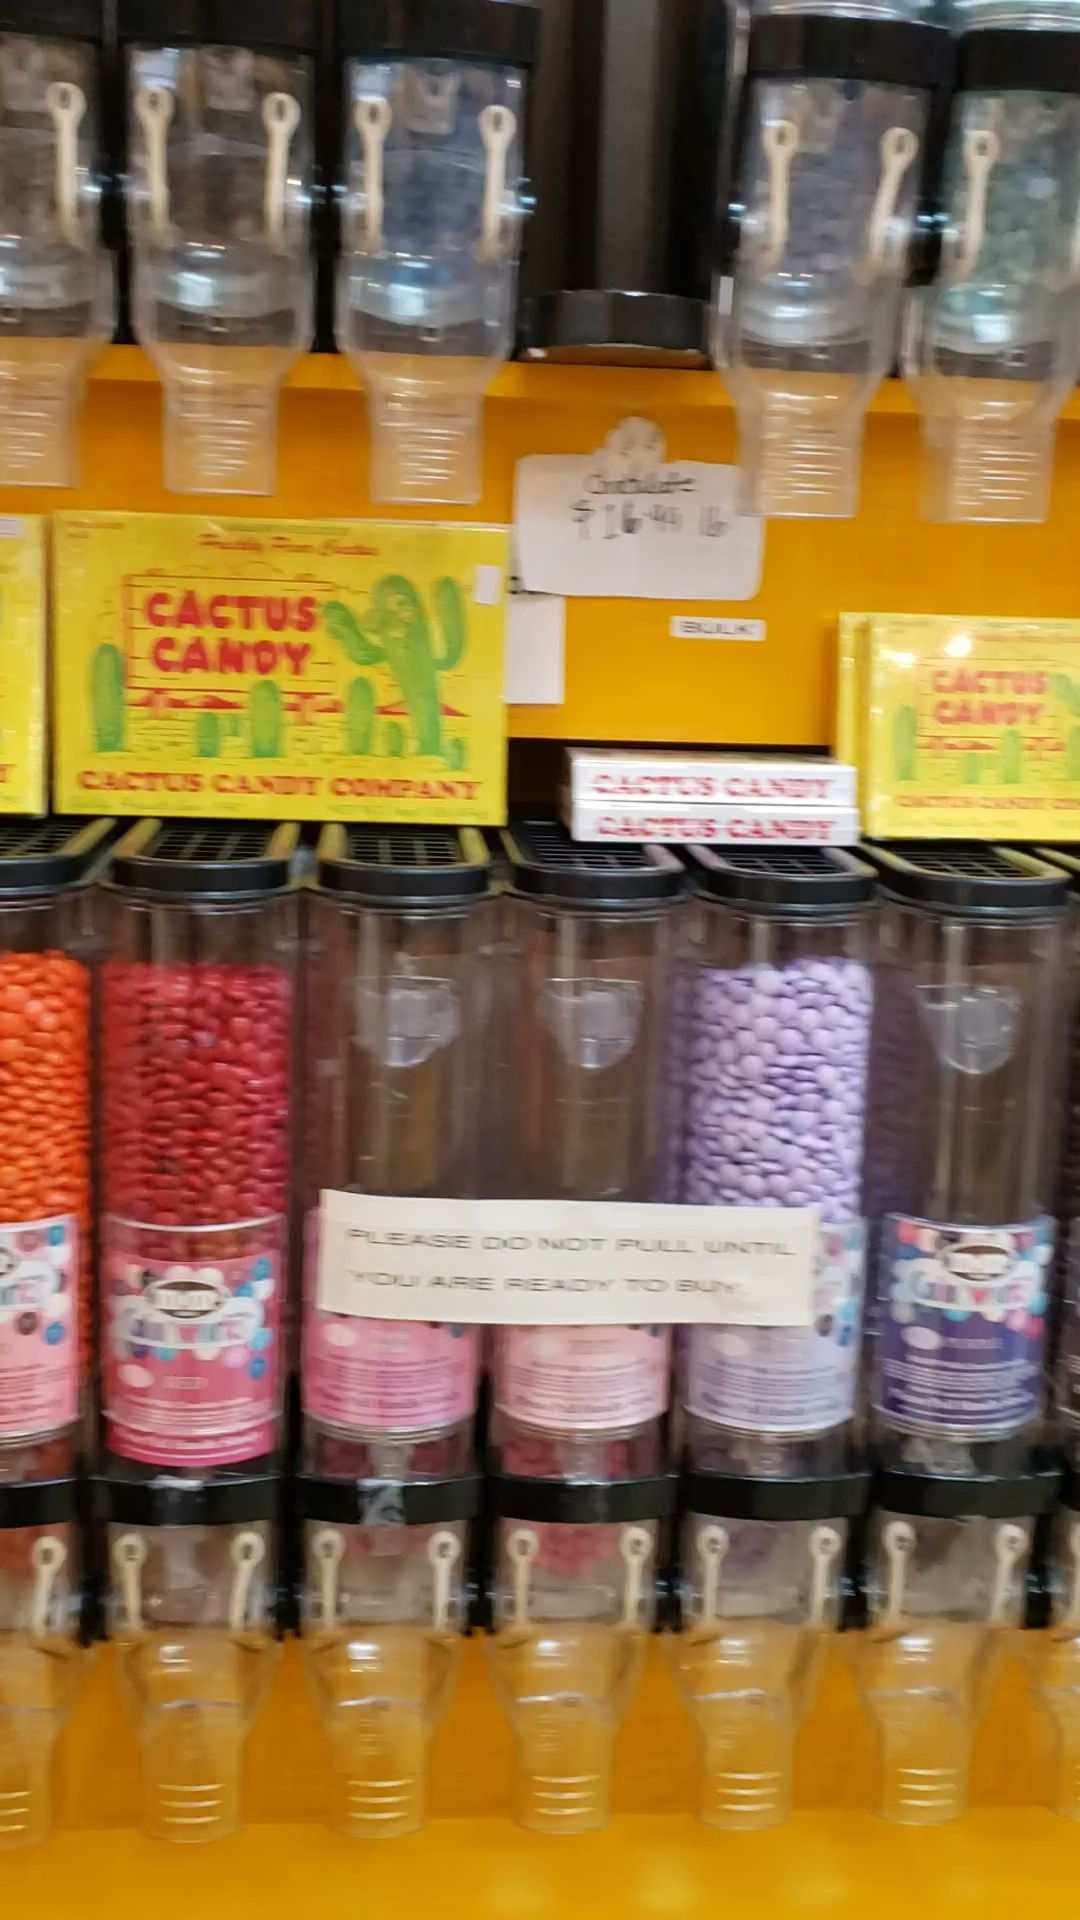 Fuzziwig's Candy Factory